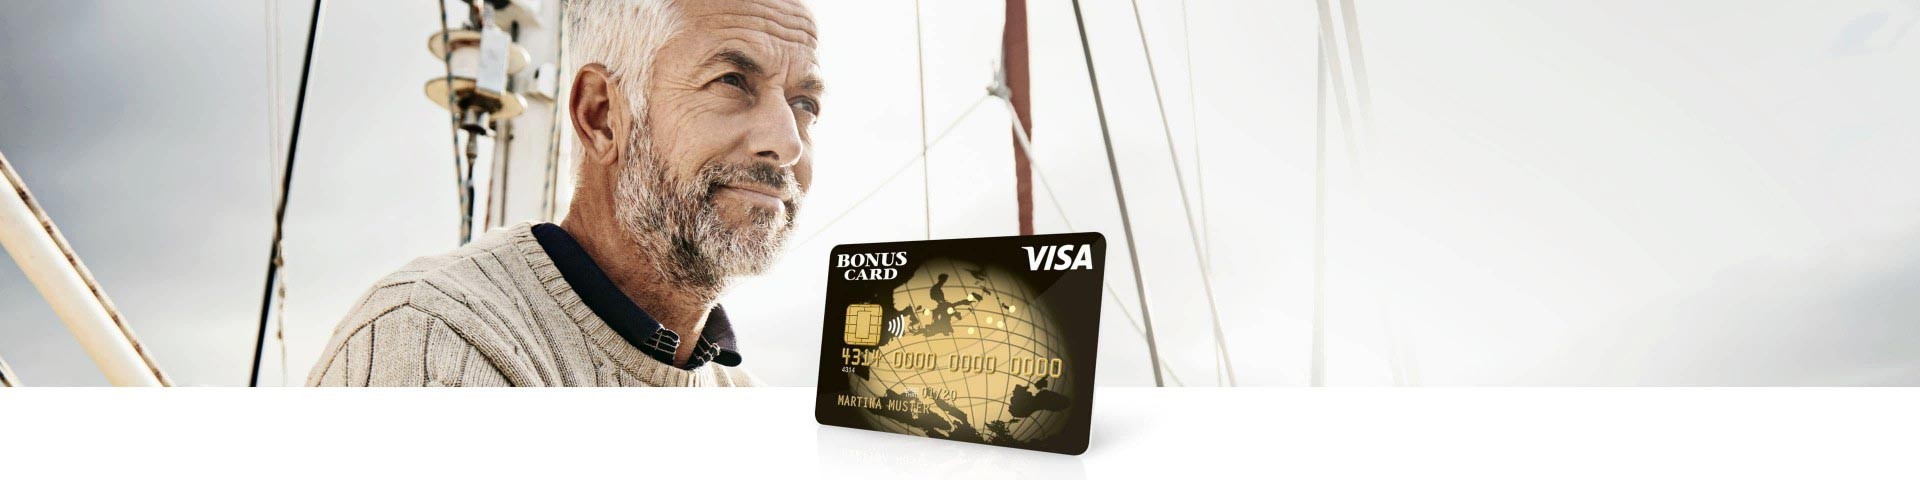 Visa Bonus Card Exclusive